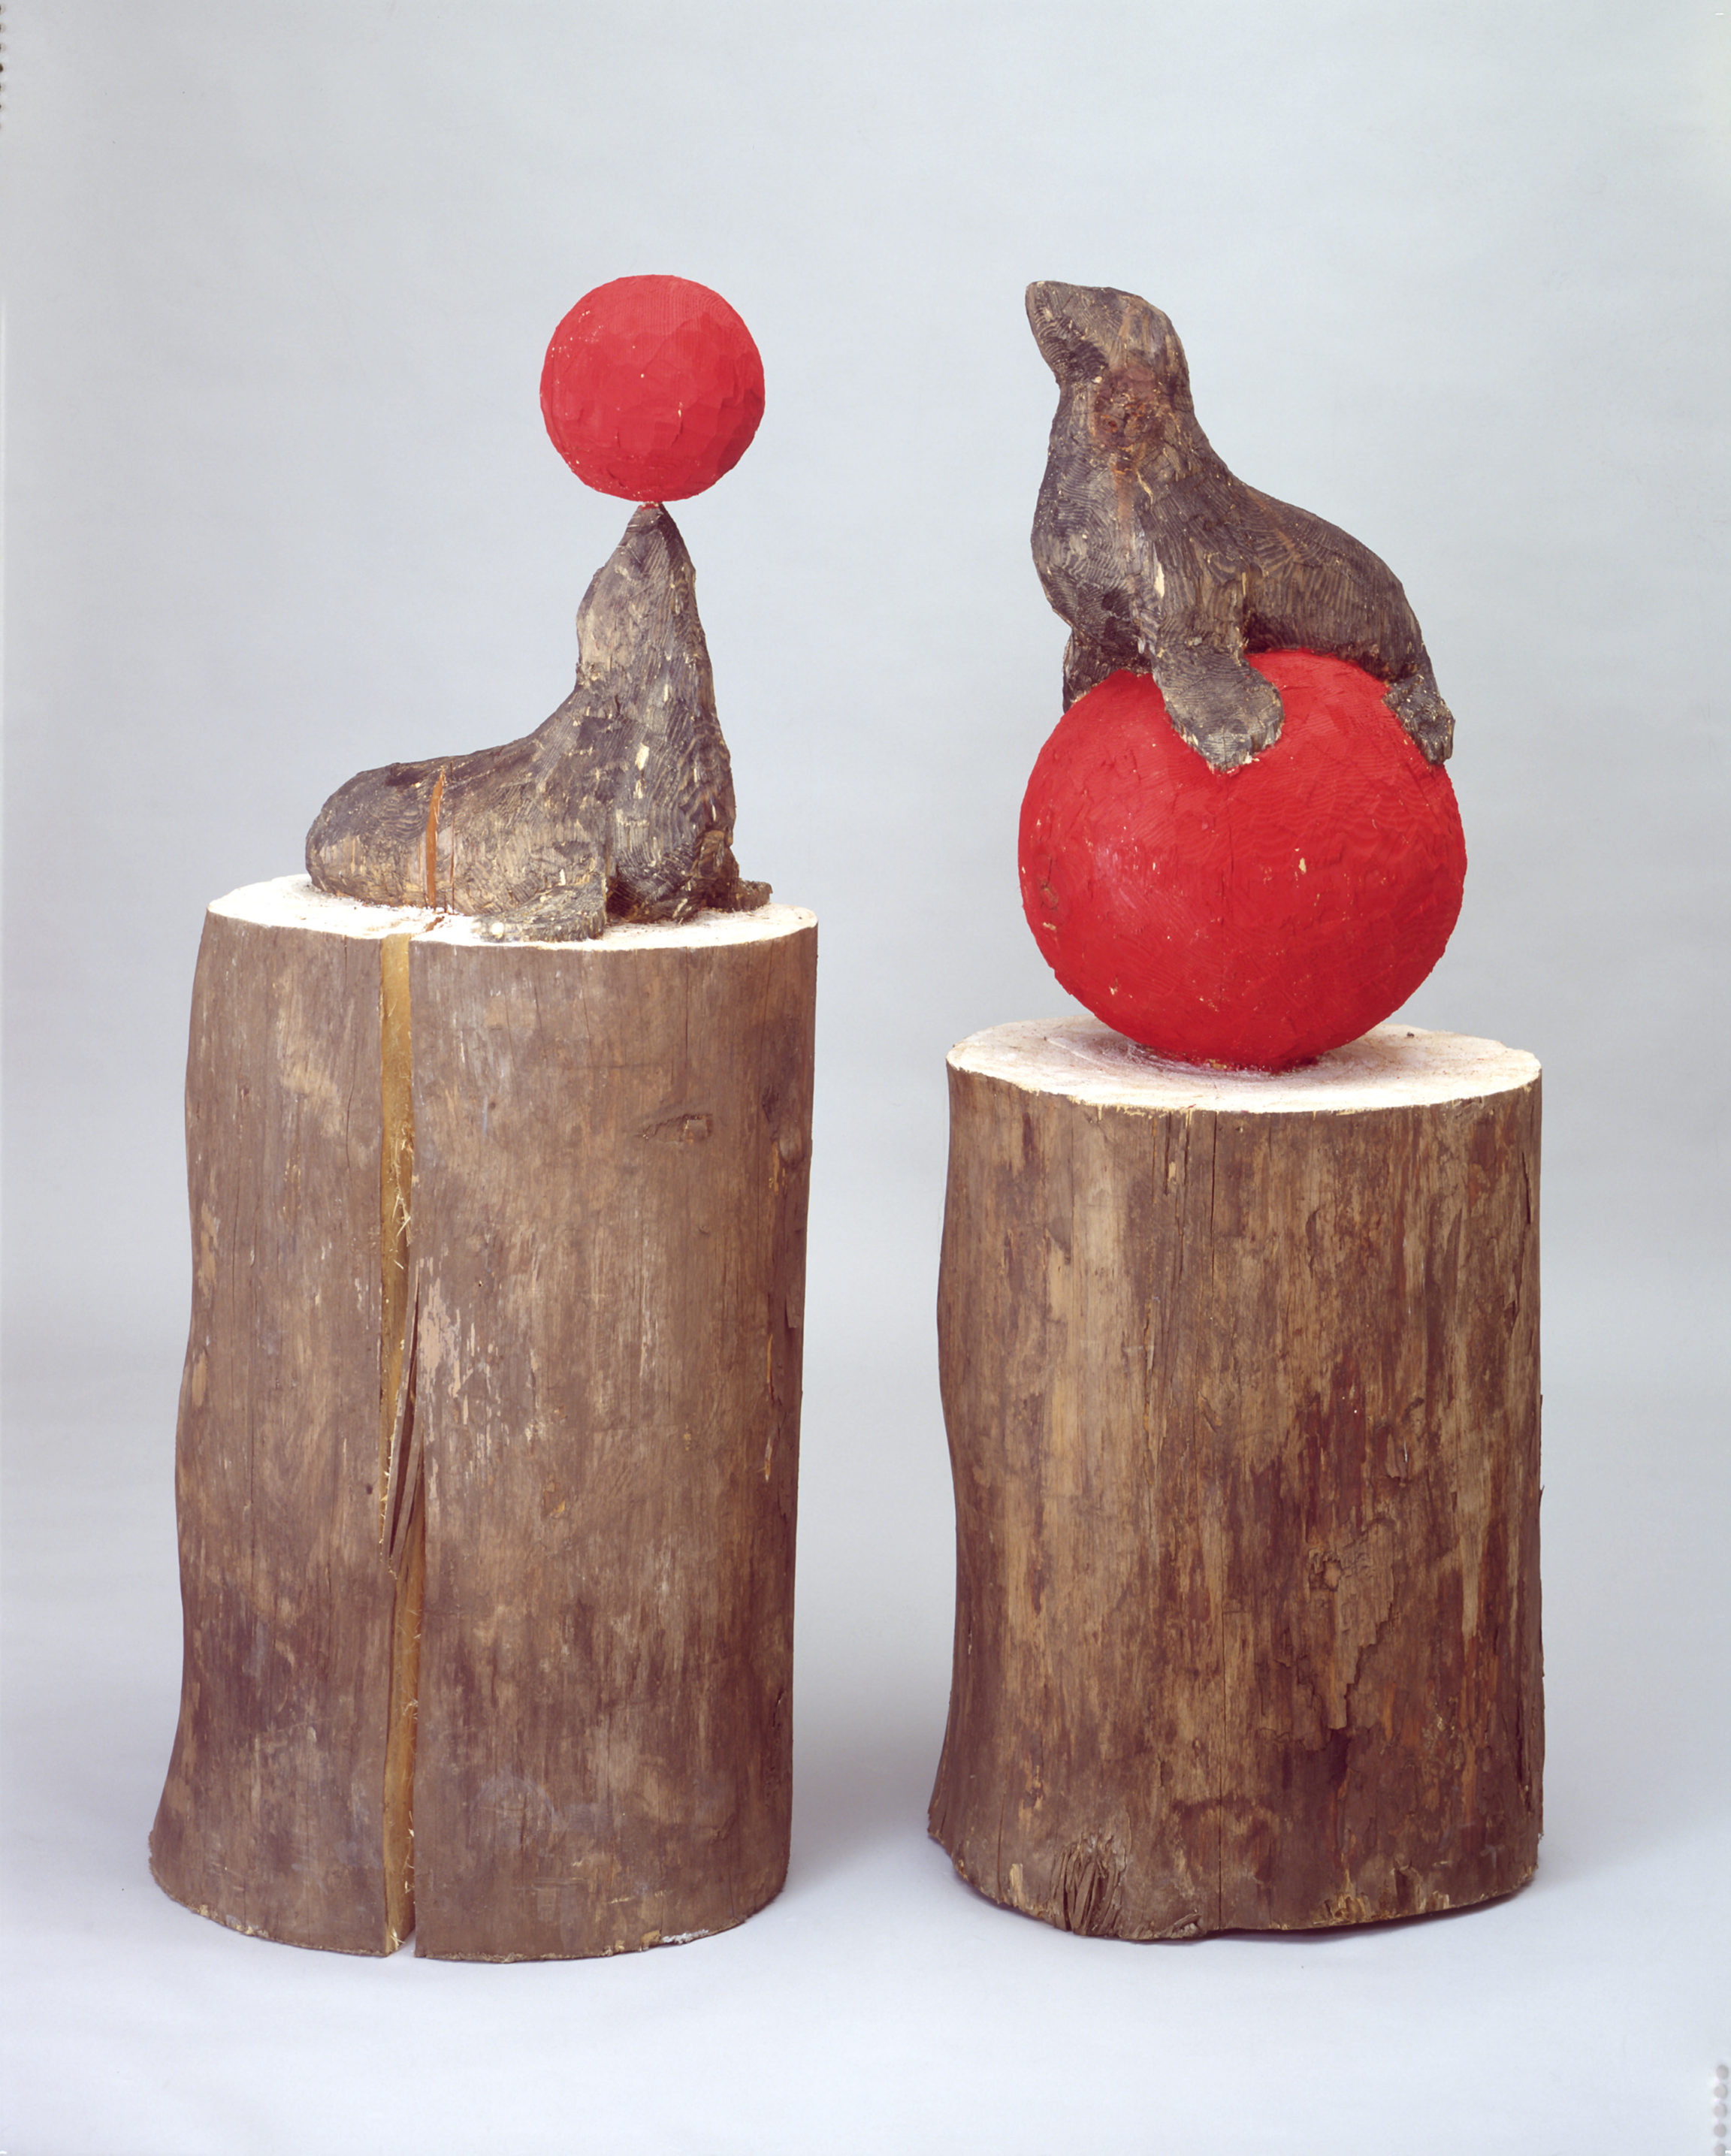 Stephan Balkenhol , Phoque I et II (Seal I and II), 1989